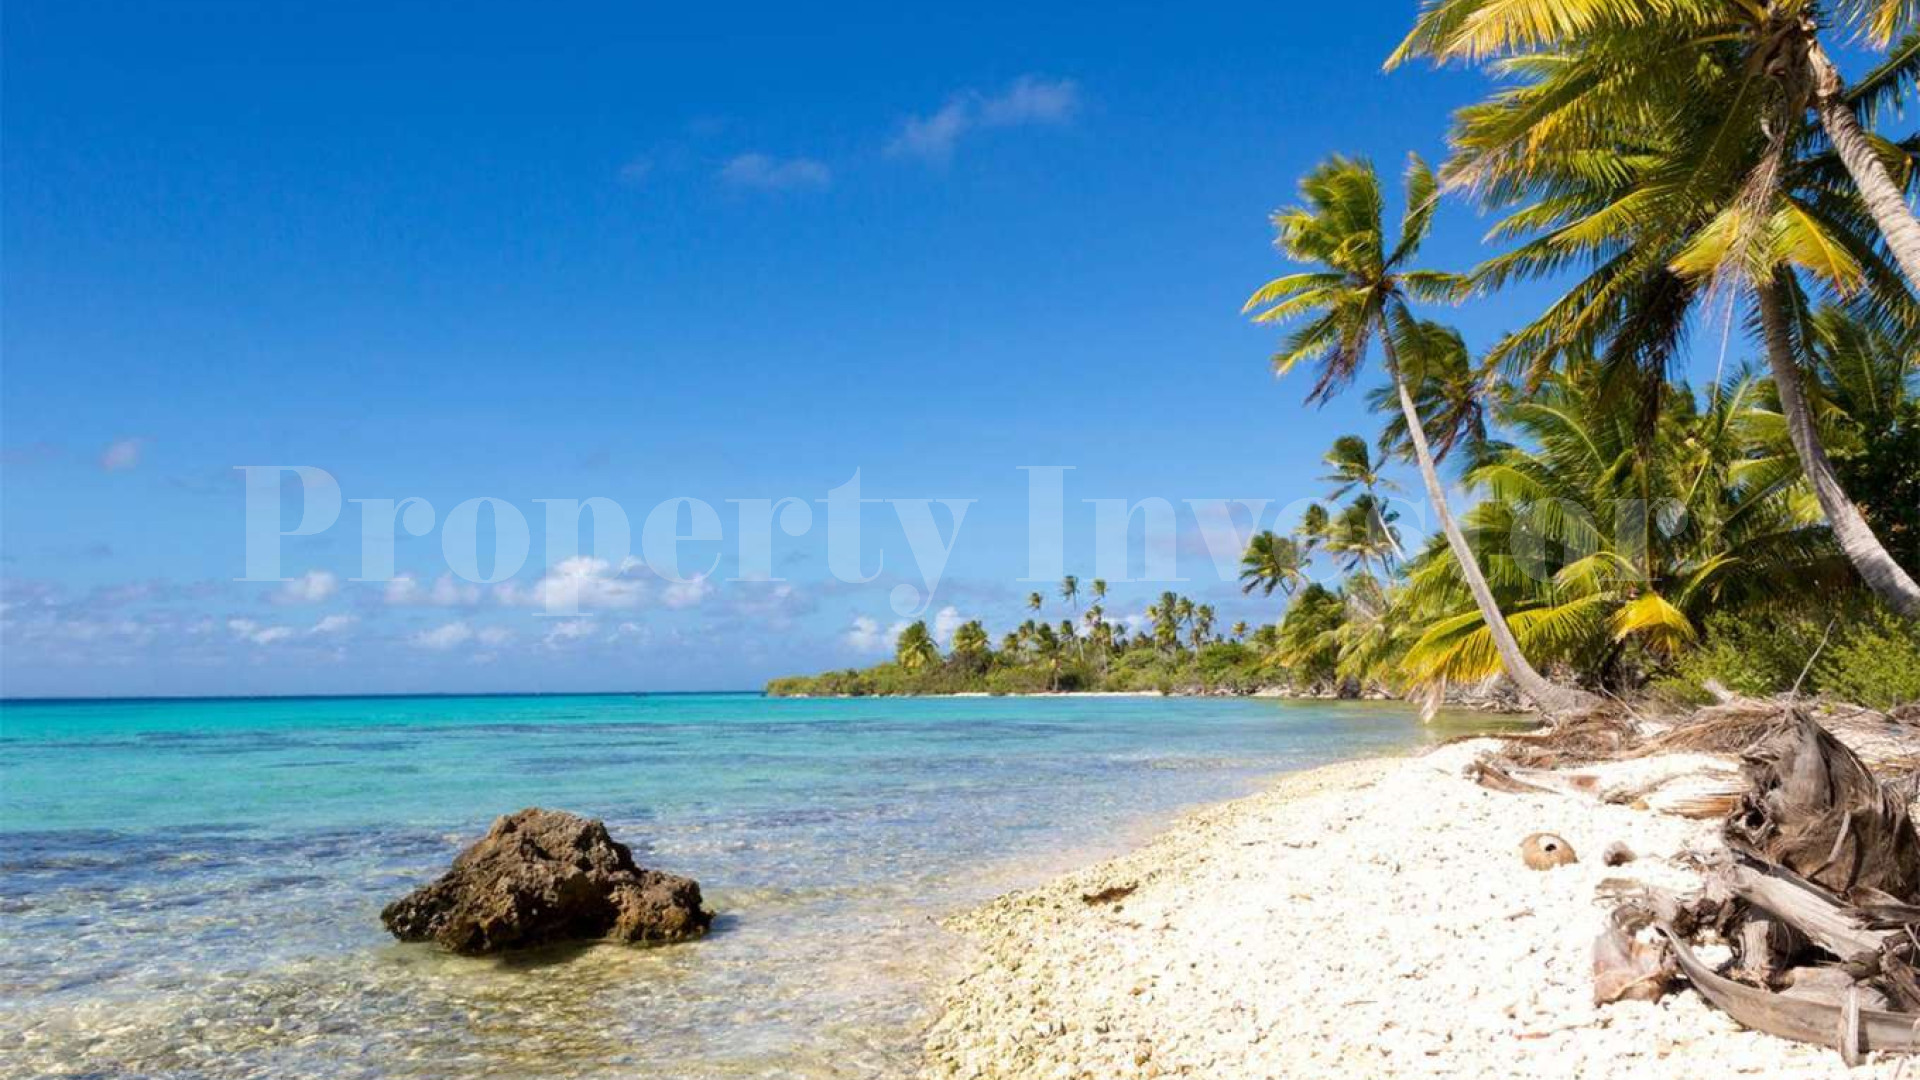 Pristine 9.7 Hectare Private Virgin Island for Sale in French Polynesia